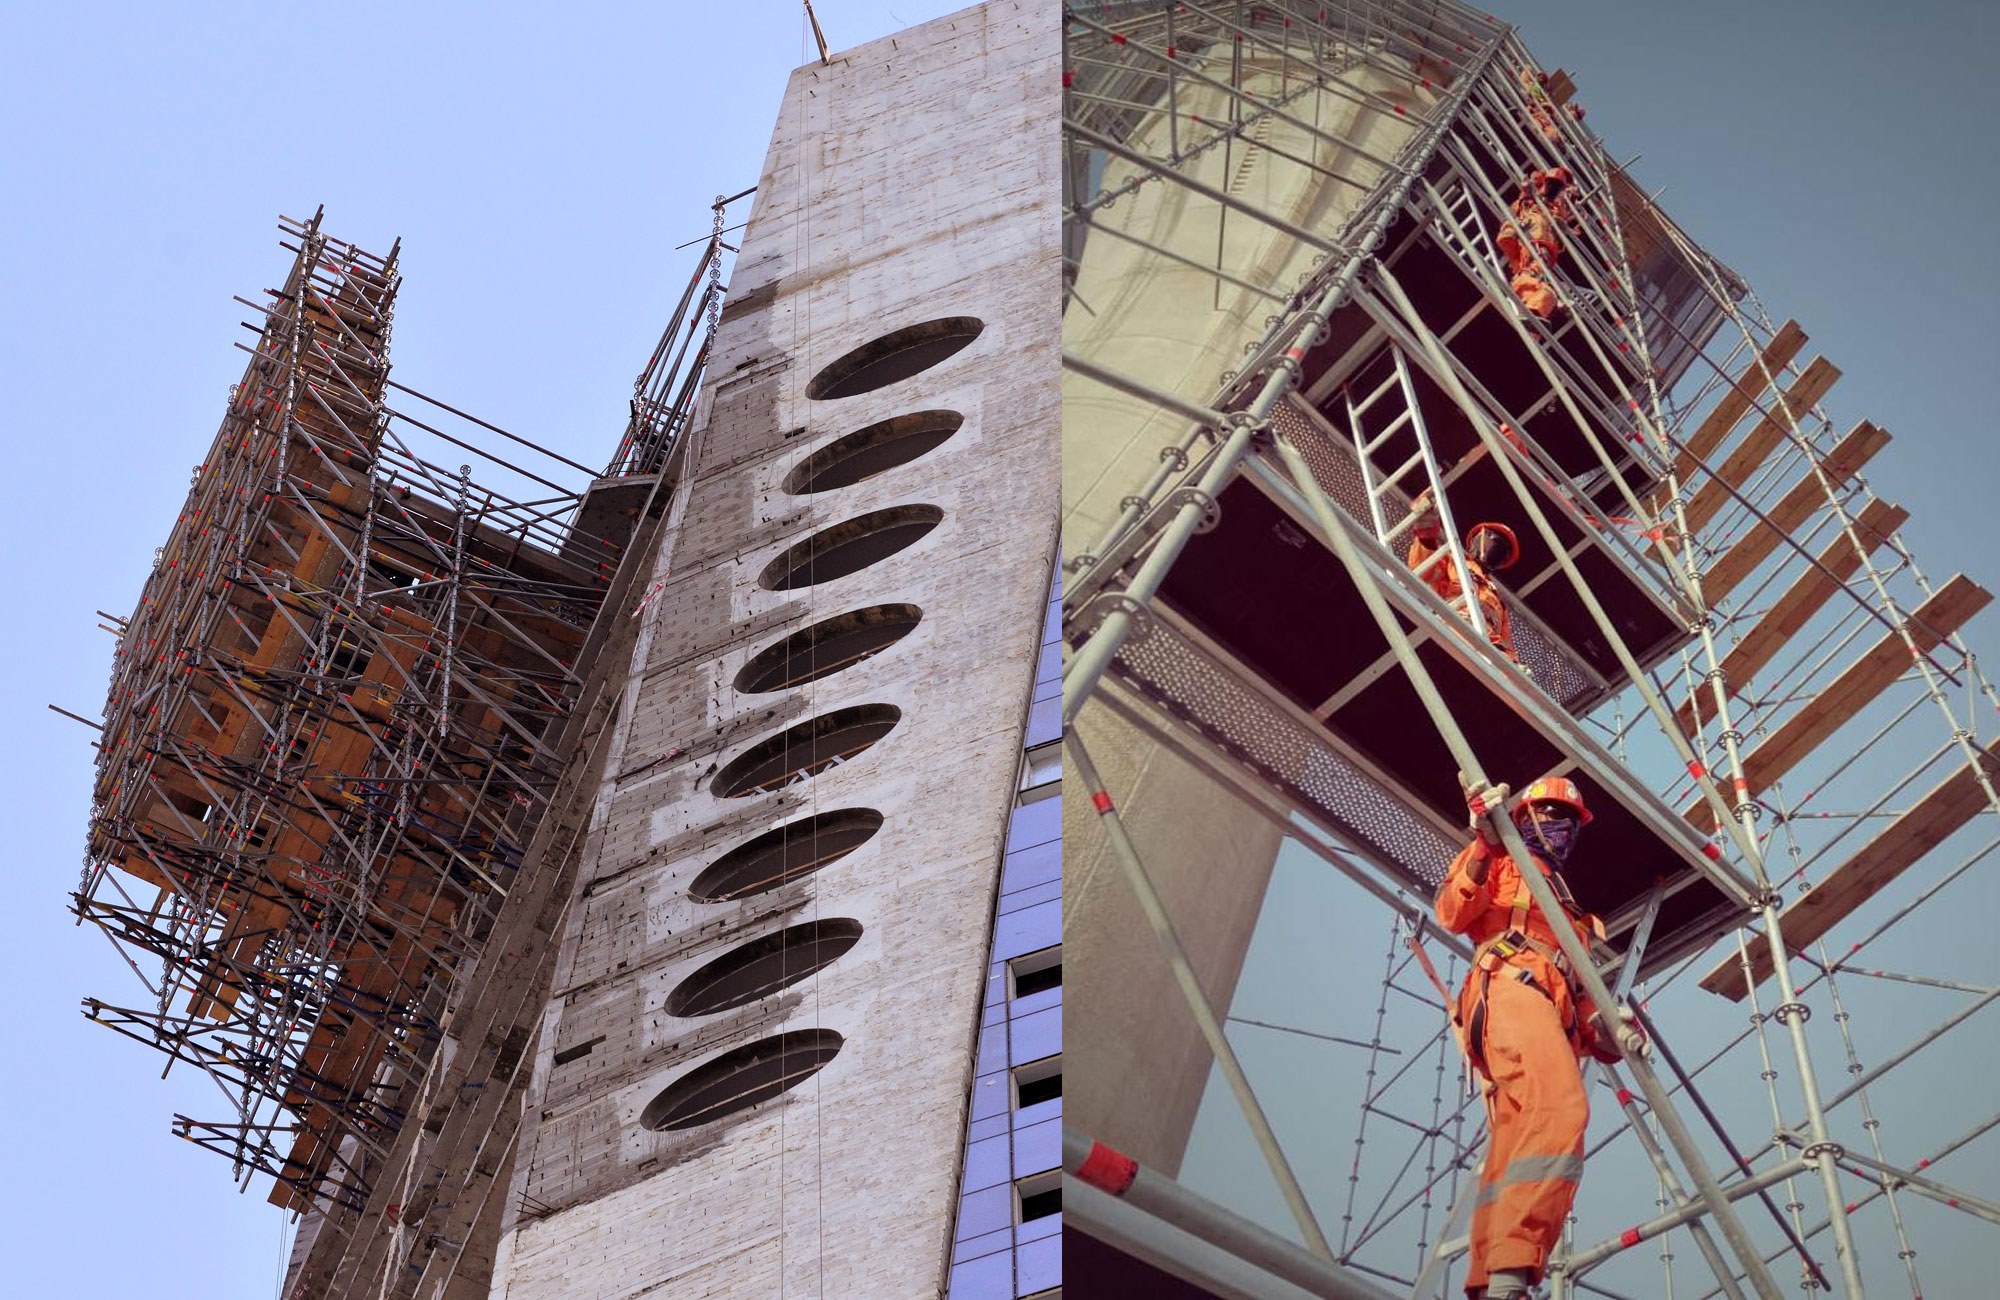 scaffolding rental company in dubai